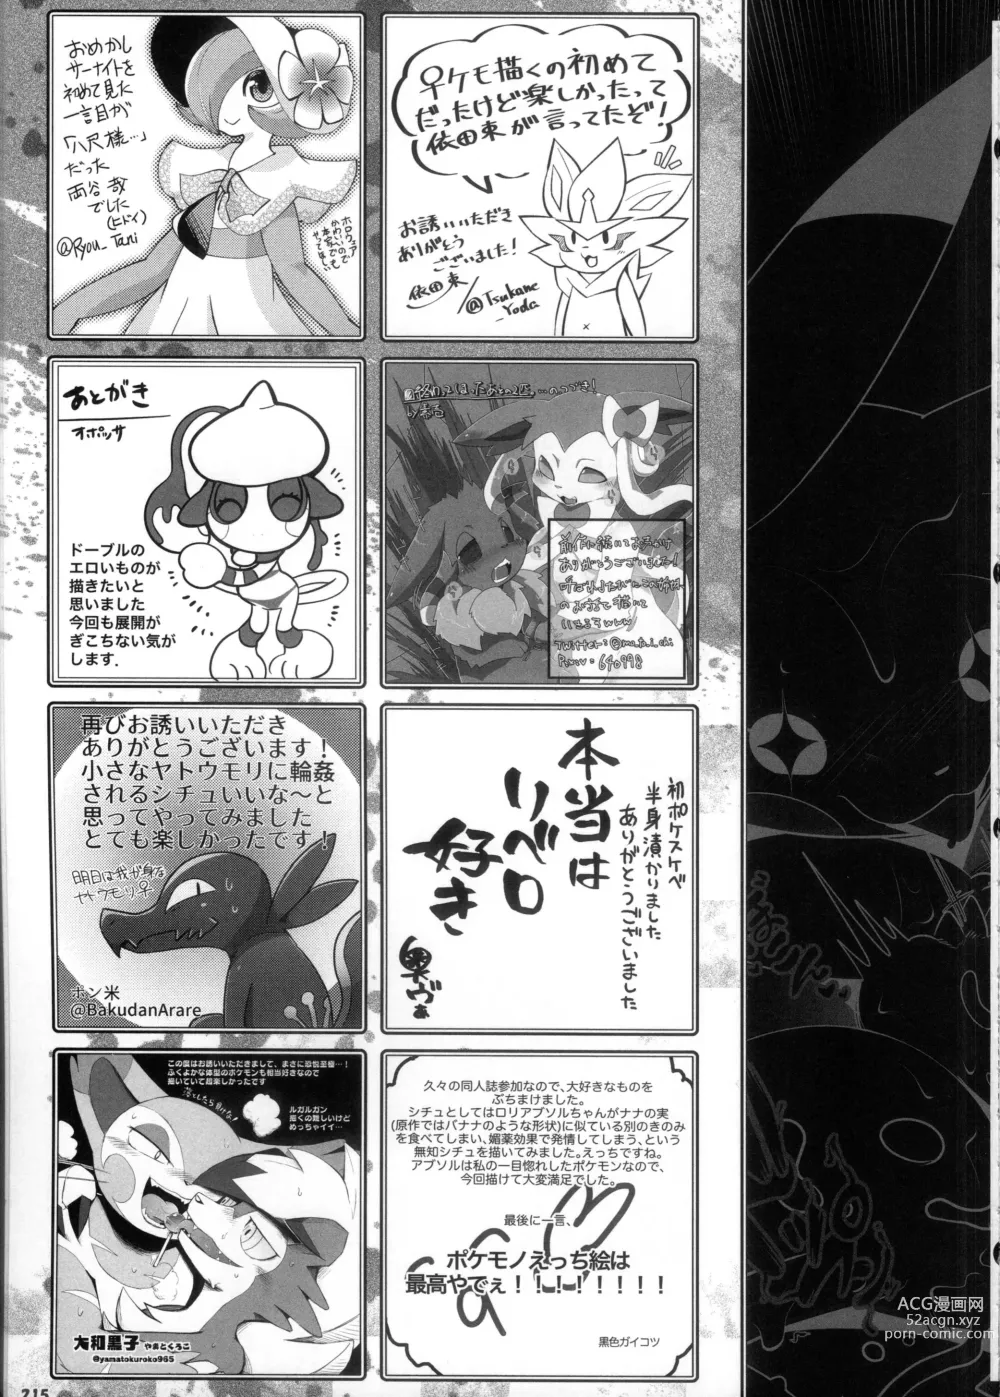 Page 214 of doujinshi Kairaku Ochi ♀ 3